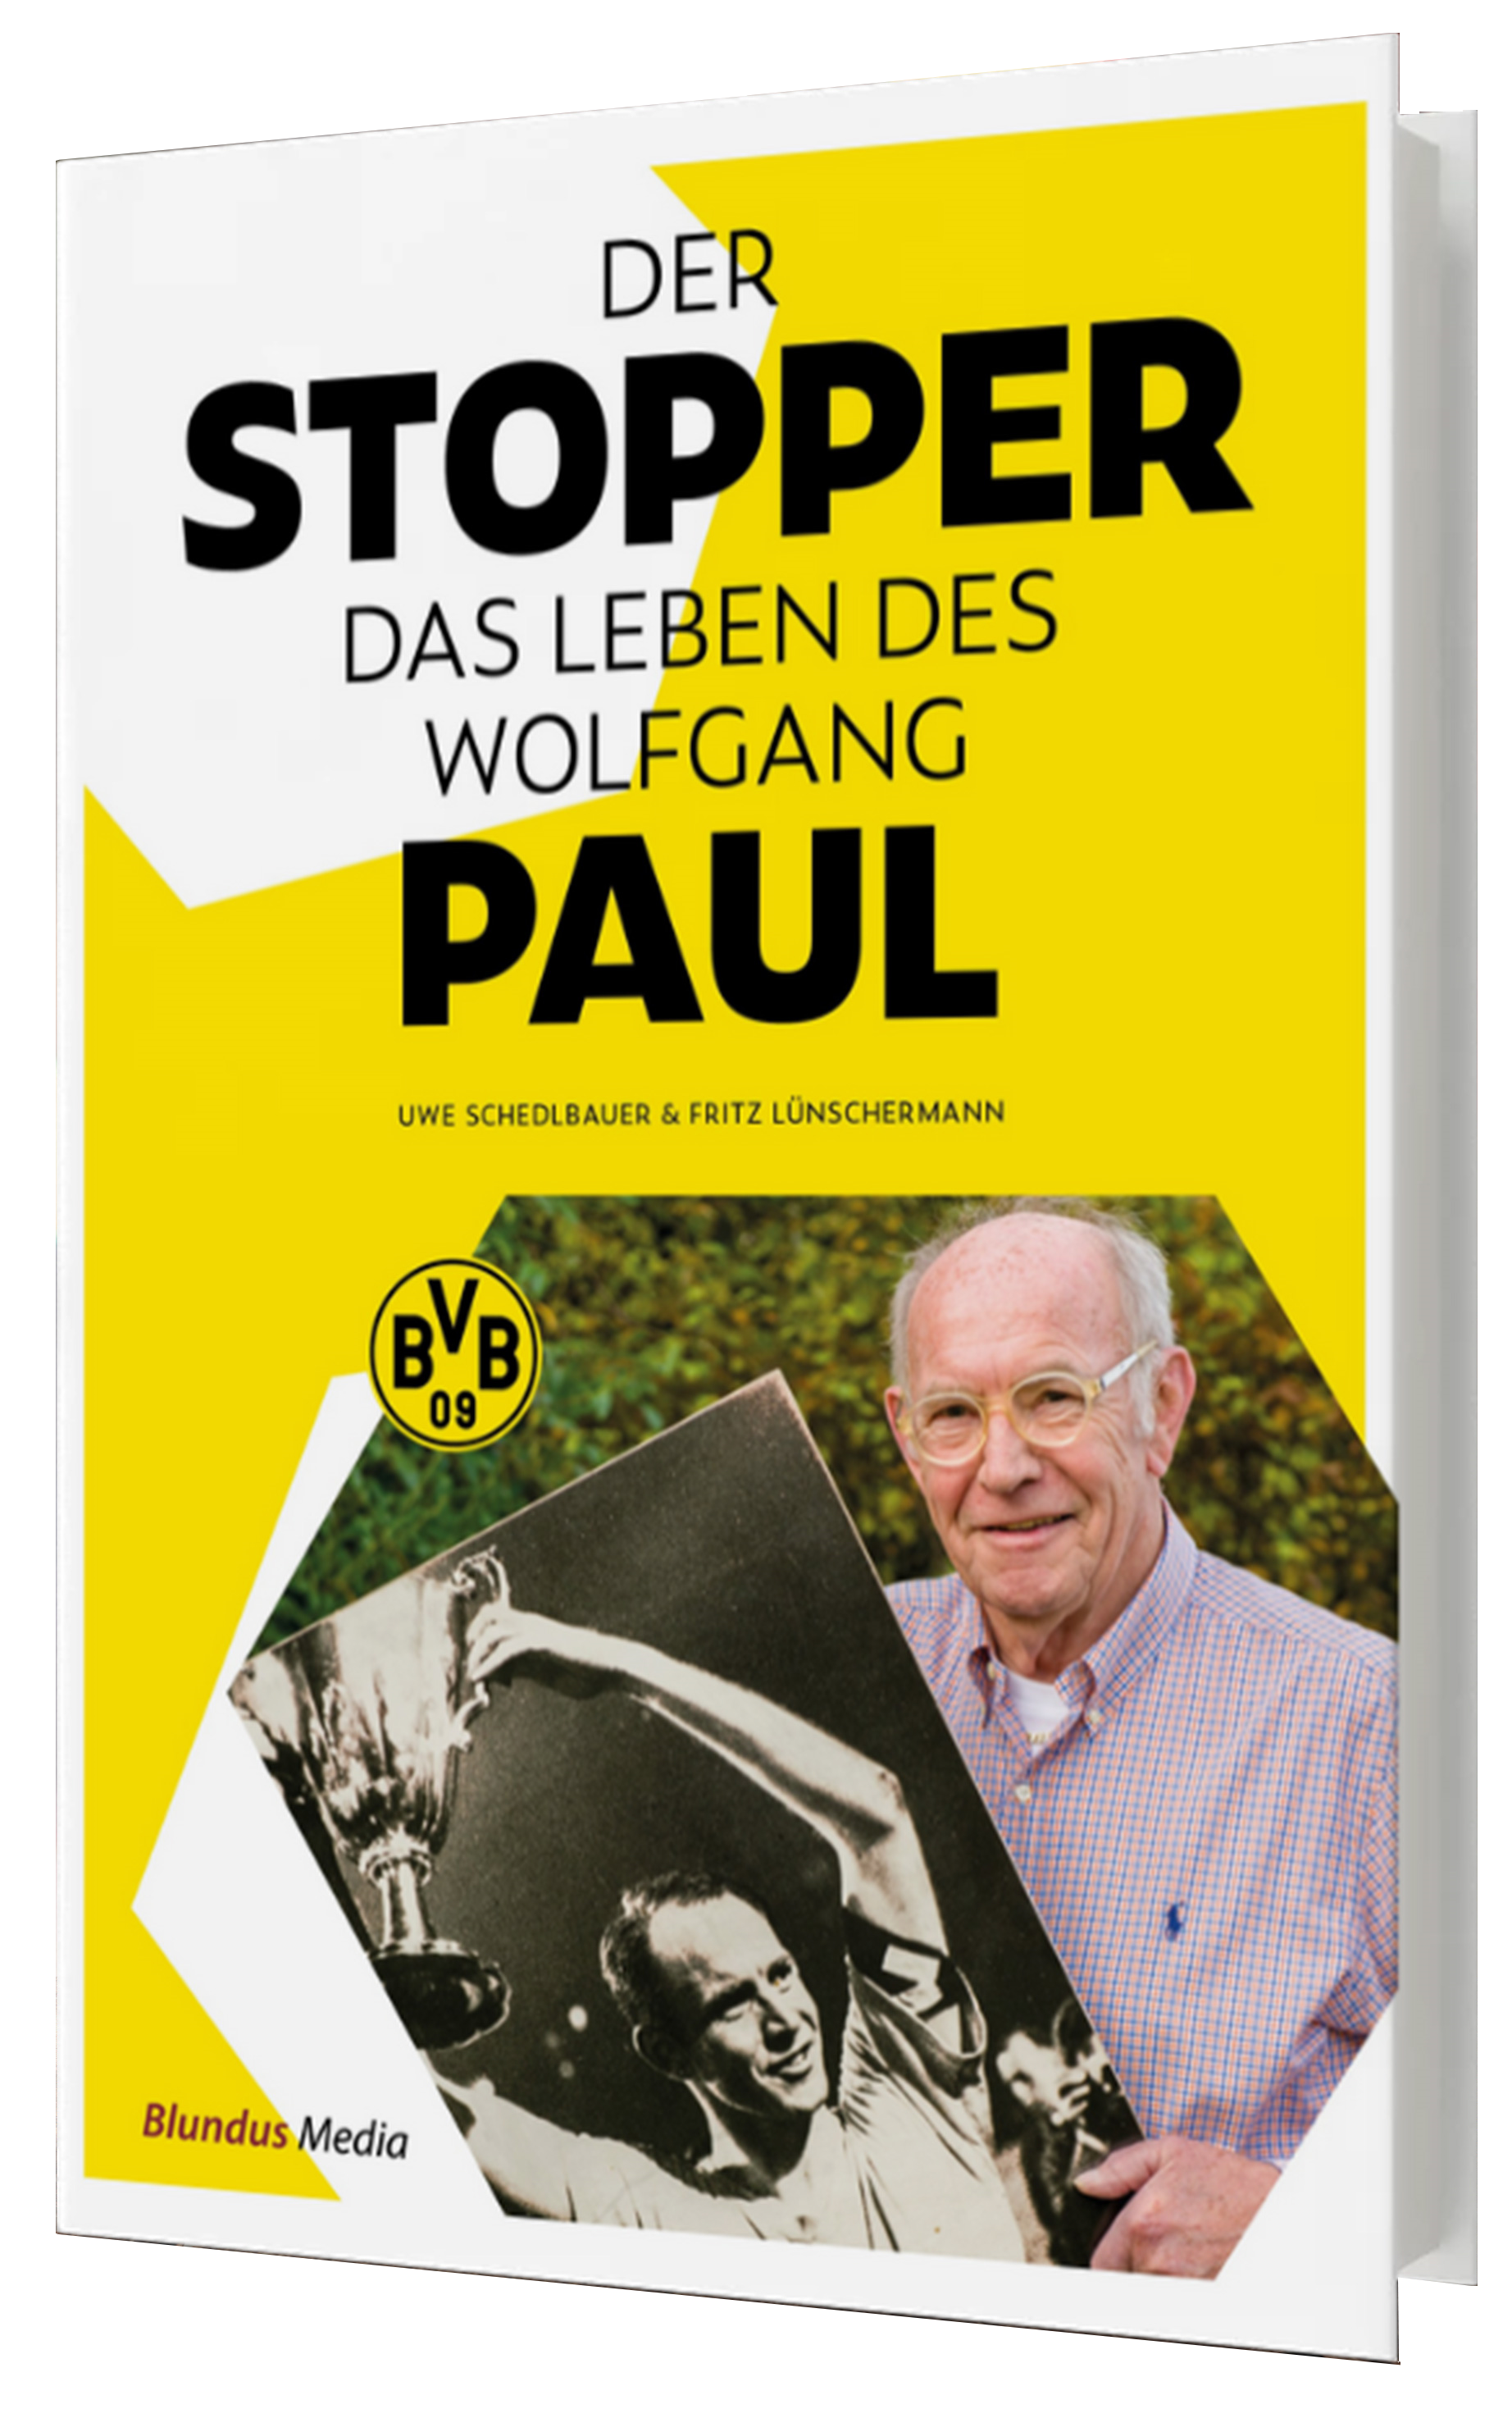 „DER STOPPER“ – Das Leben des Wolfgang Paul